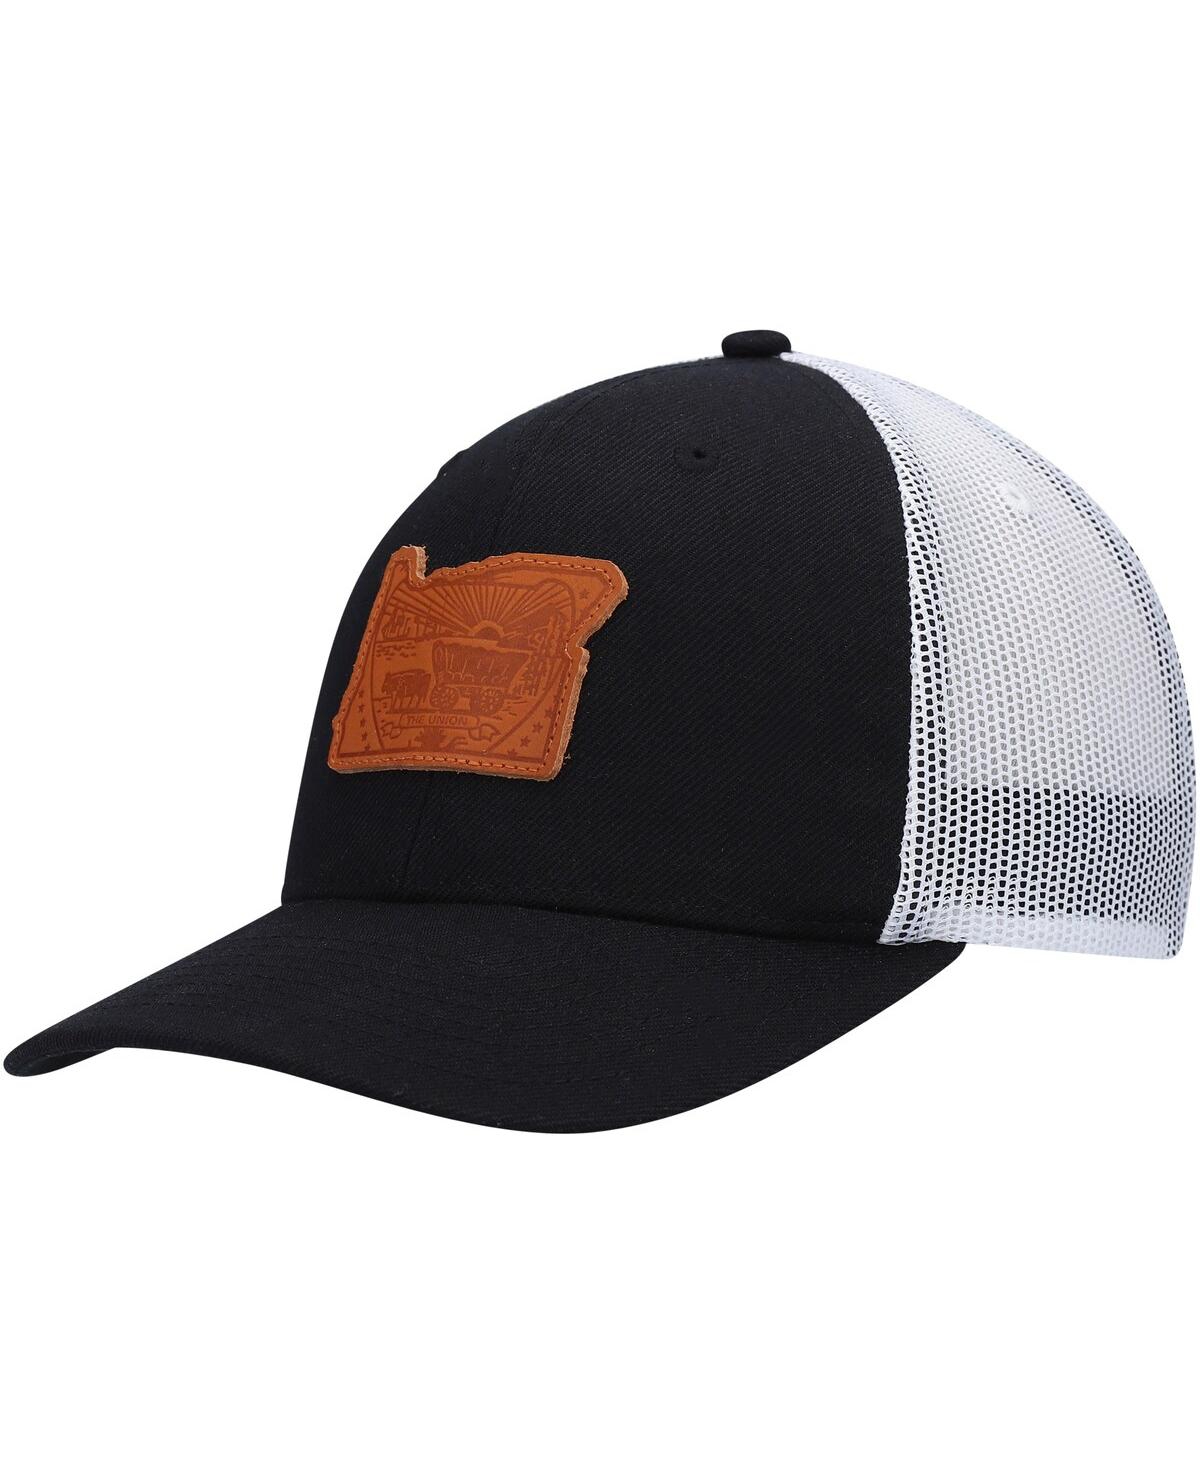 Men's Local Crowns Black Oregon Leather State Applique Trucker Snapback Hat - Black